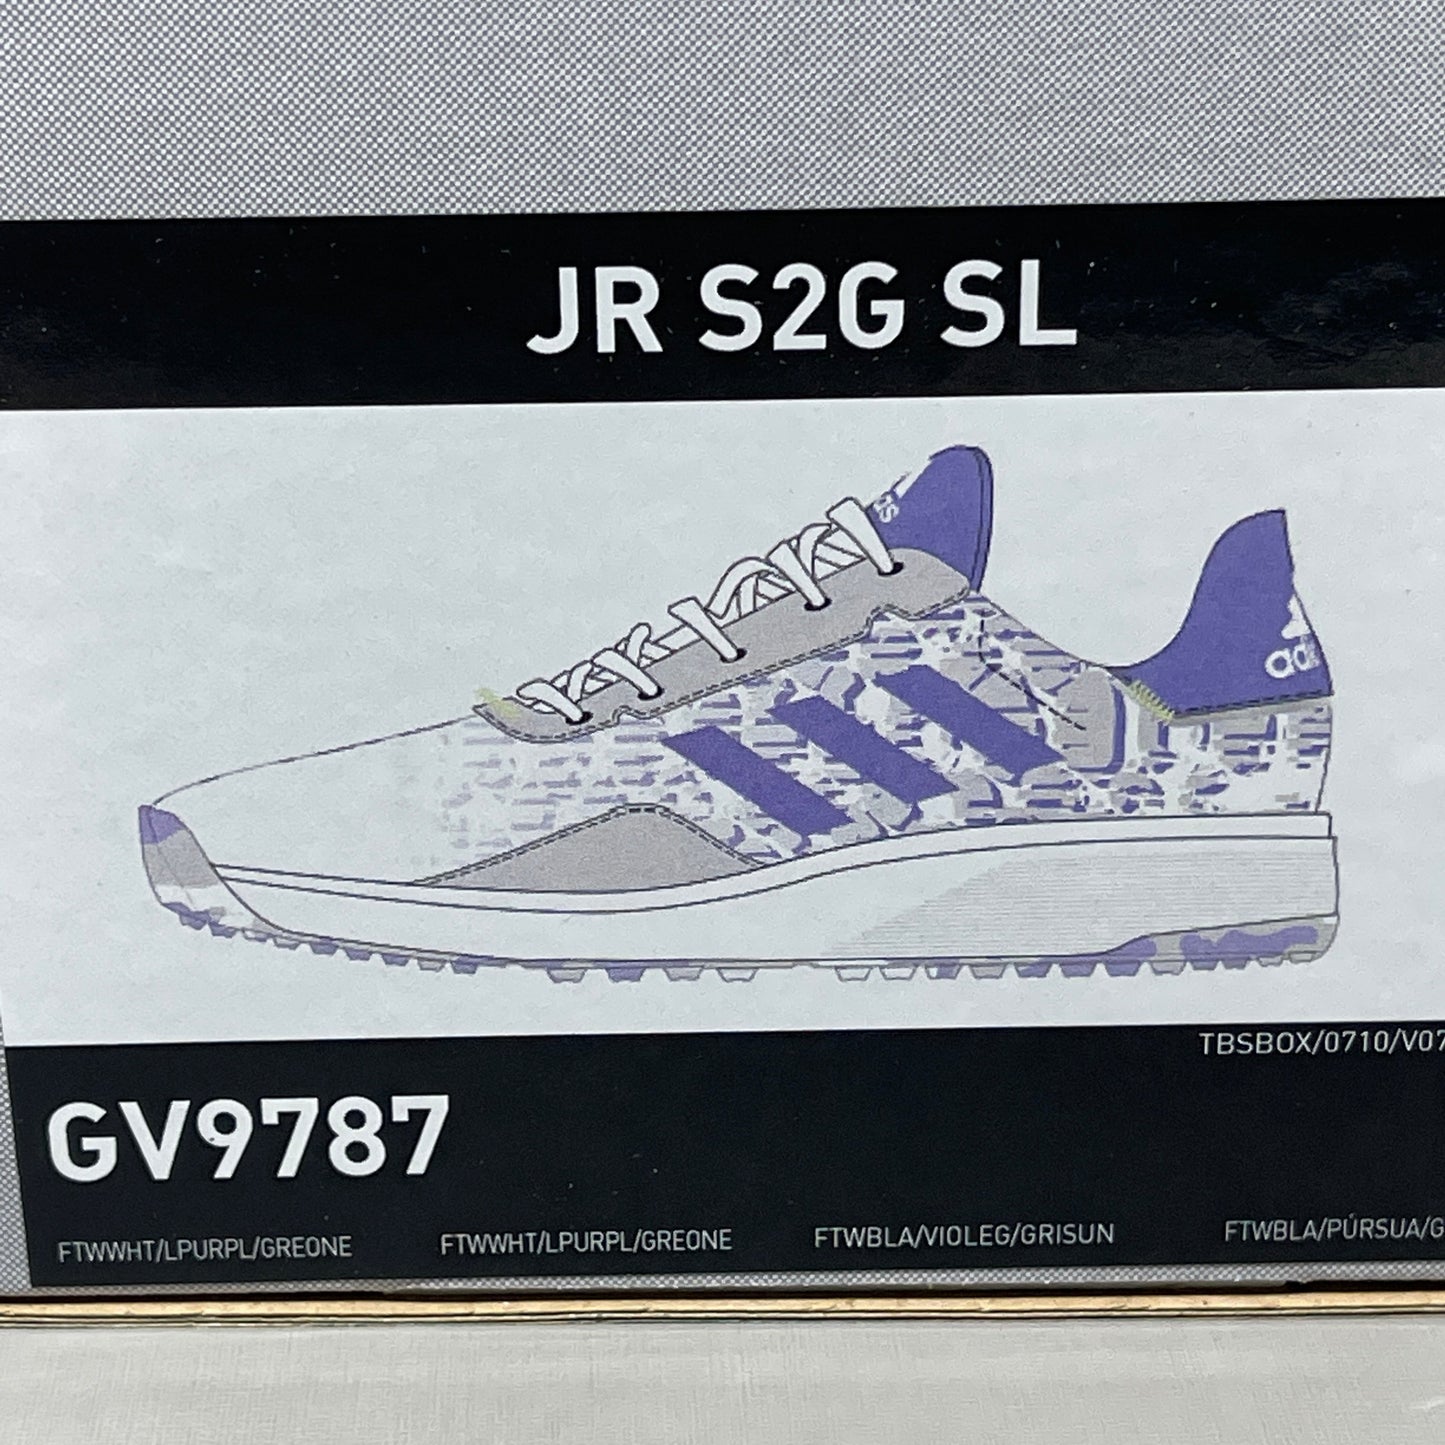 ADIDAS Golf Shoes JR S2G SL Waterproof Youth Sz 5.5 White / Lime / Purple GV9787 (New)